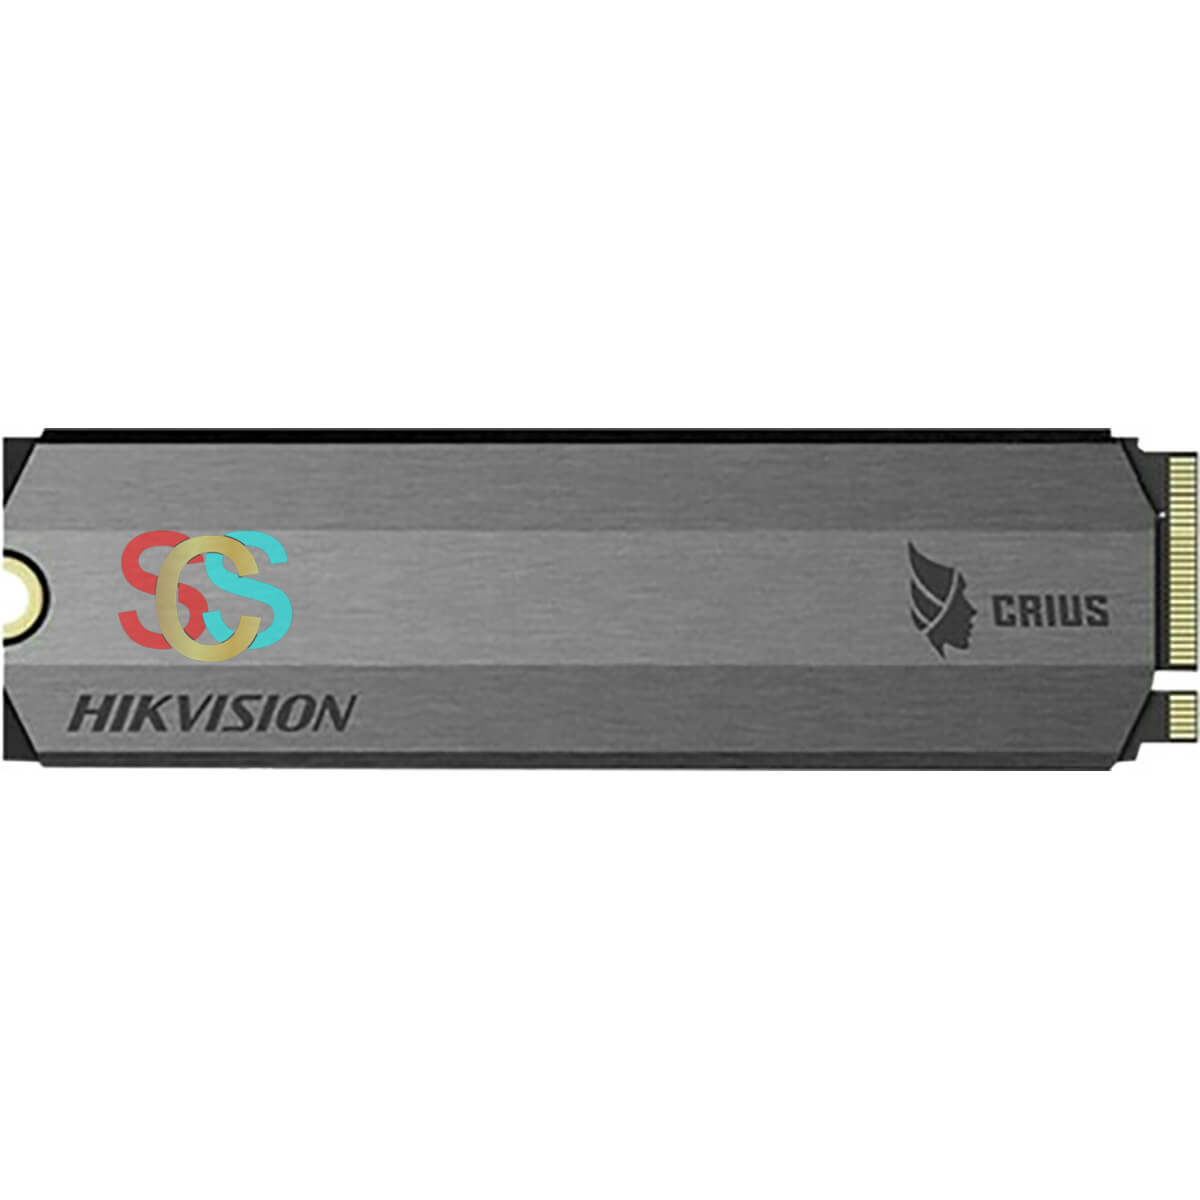 Hikvision E2000 256GB M.2 2280 PCIe 3.0 x4 NVMe SSD Drive